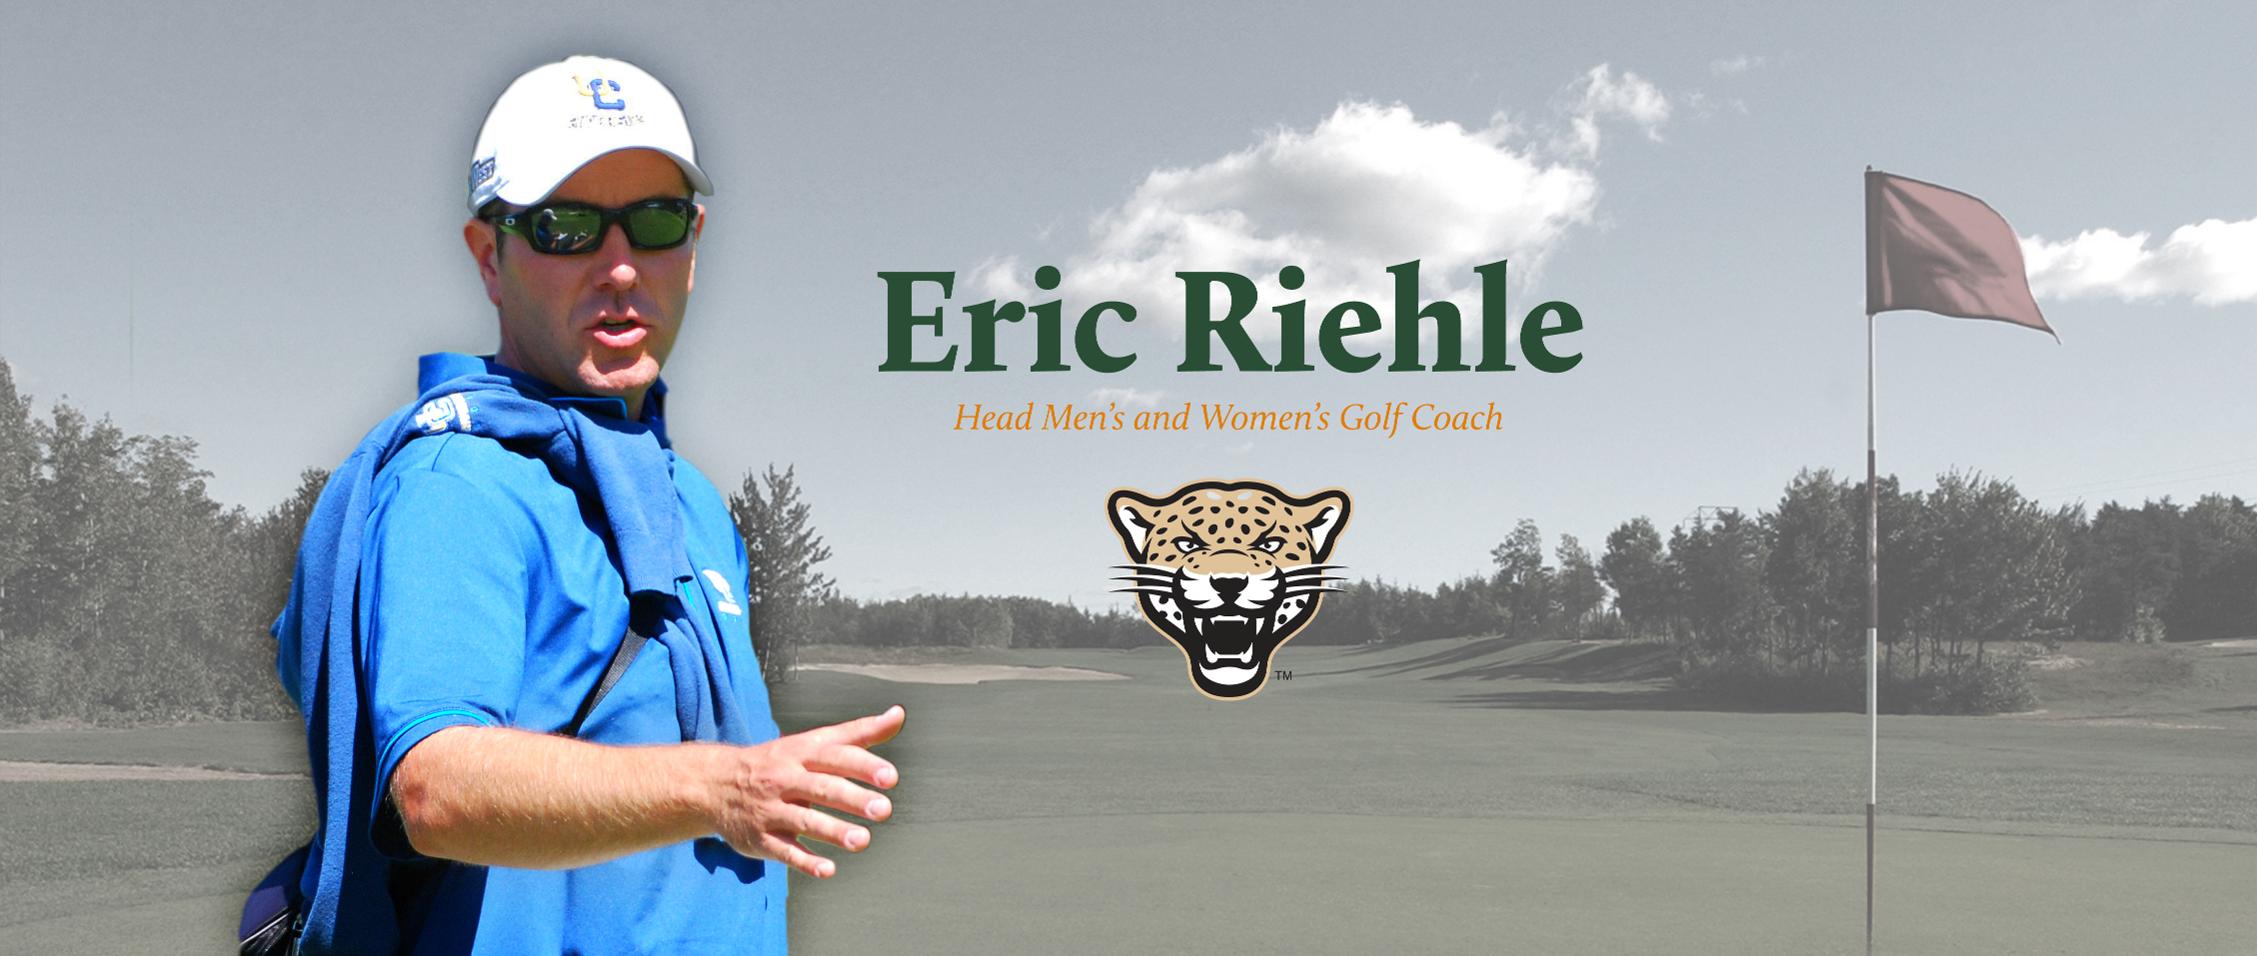 Eric Riehle returns to La Verne